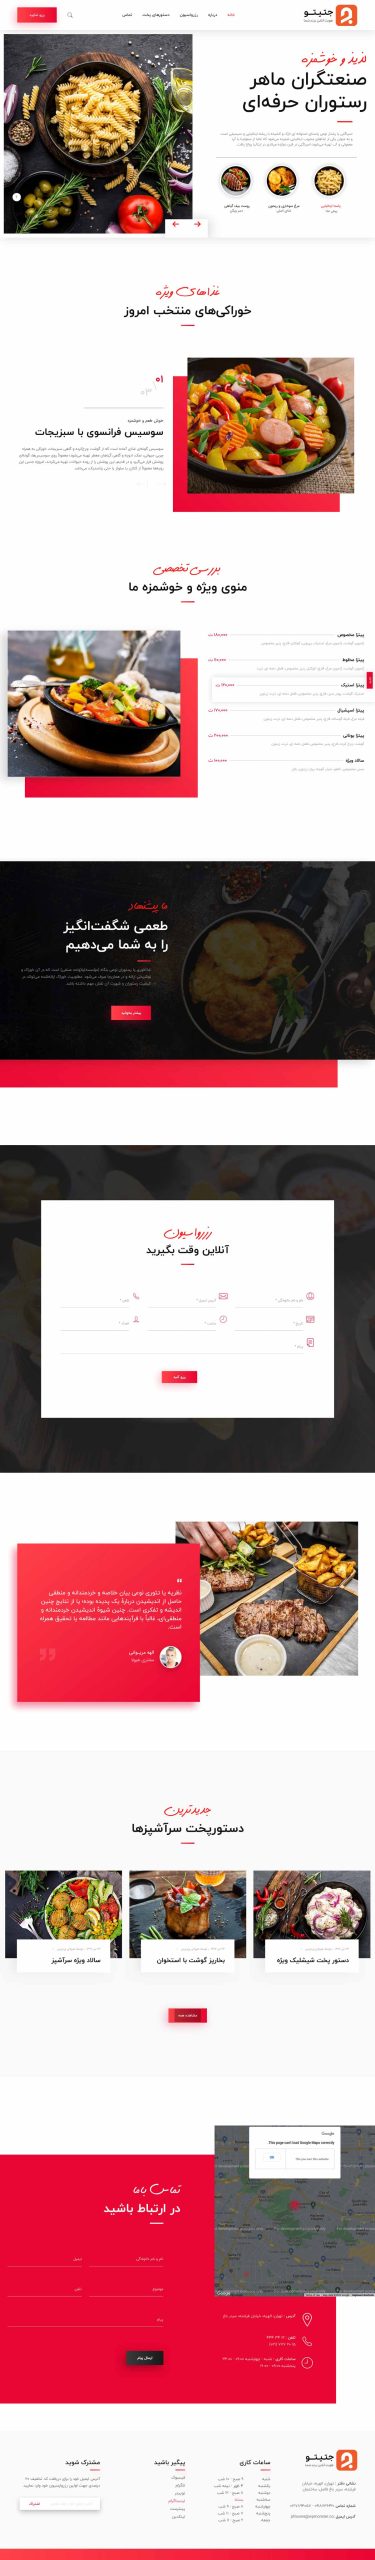 طراحی سایت رستوران - جتیتو